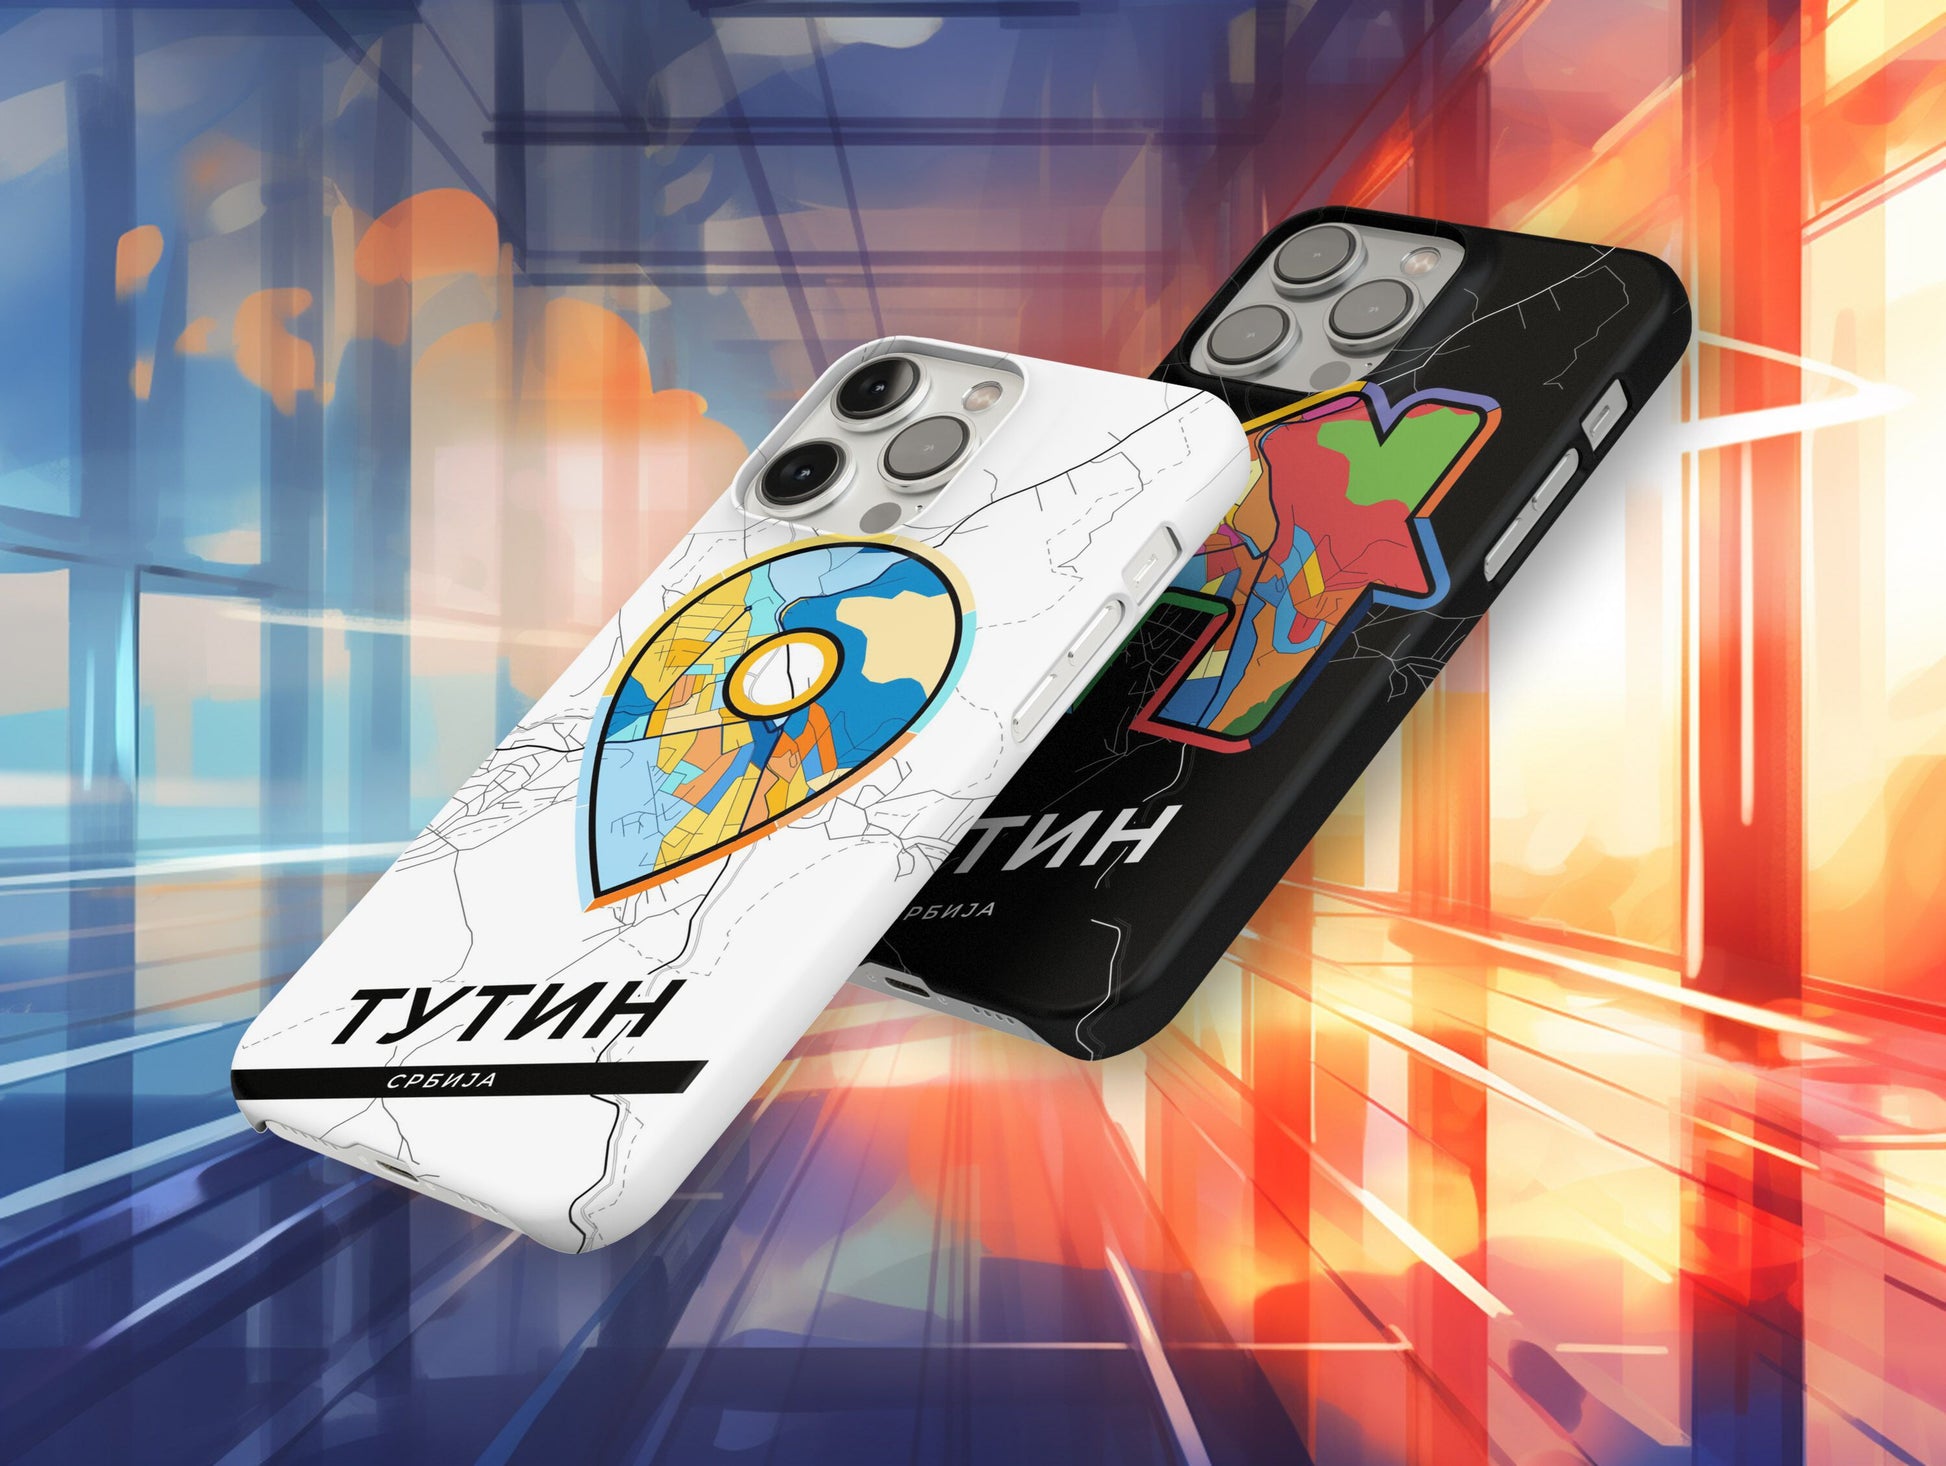 Tutin Serbia slim phone case with colorful icon